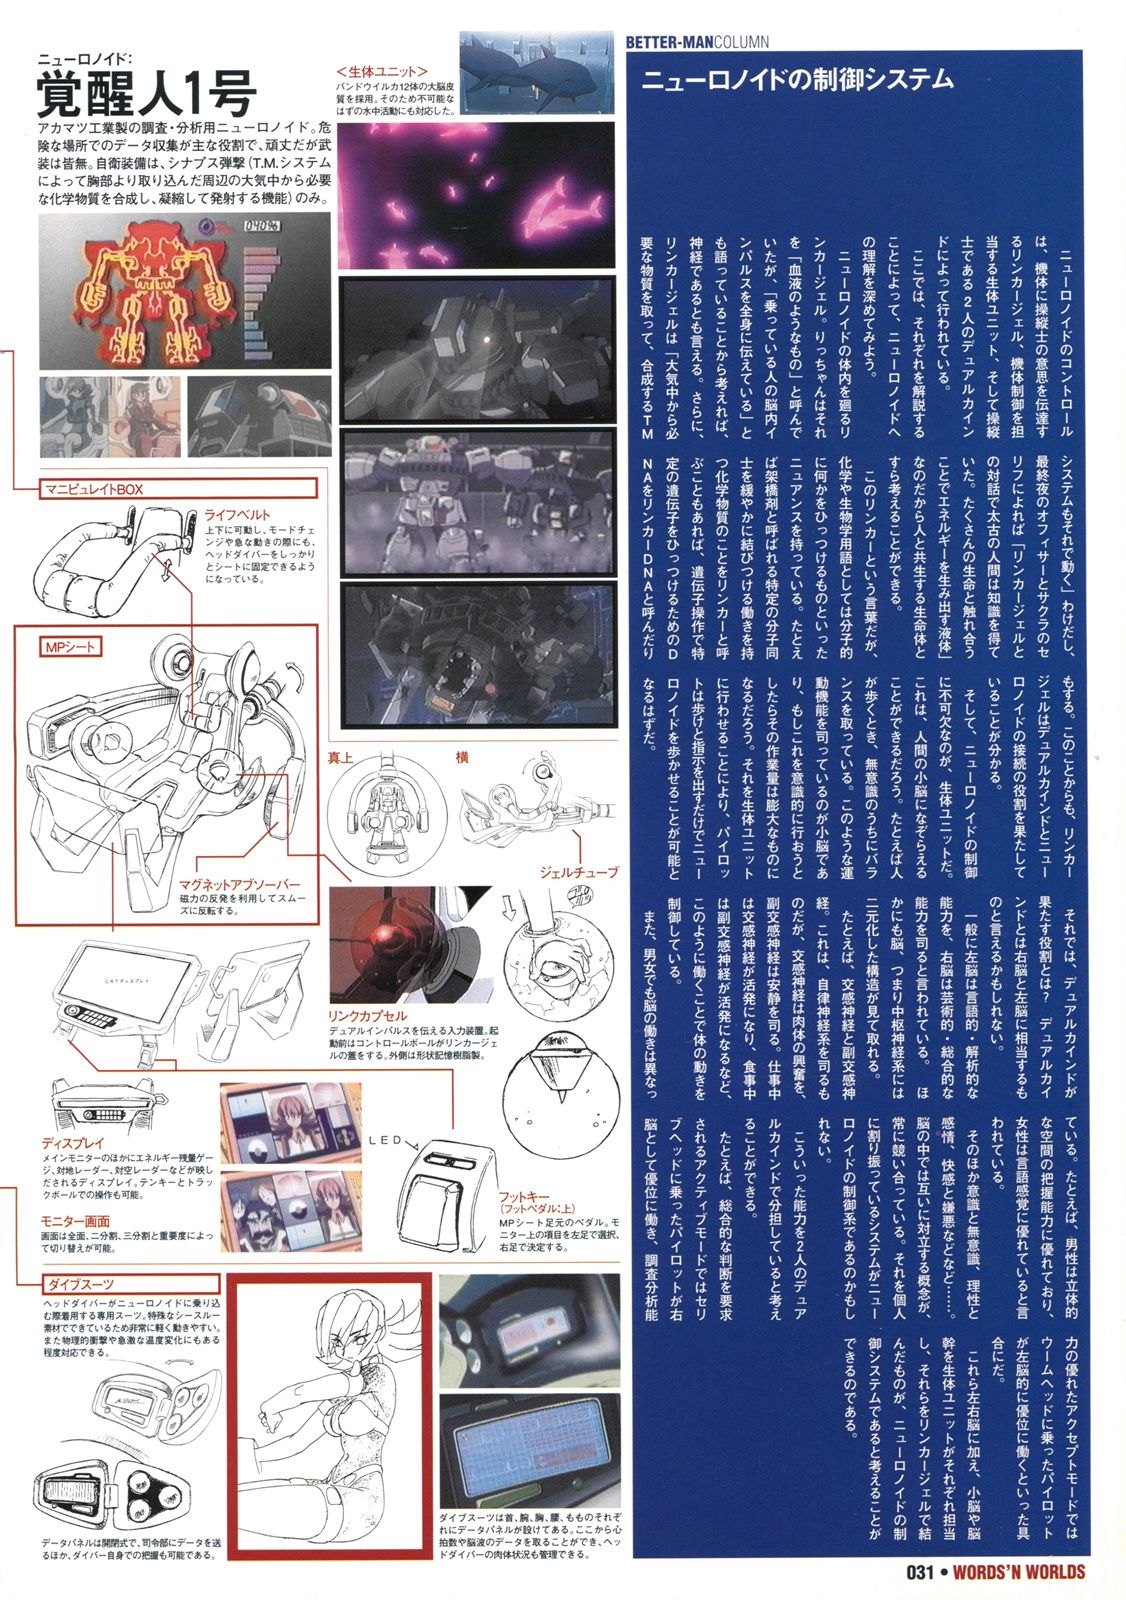 BETTERMAN COMPLETE BOOK 鑑-kagami- - 第02卷(1/3) - 7